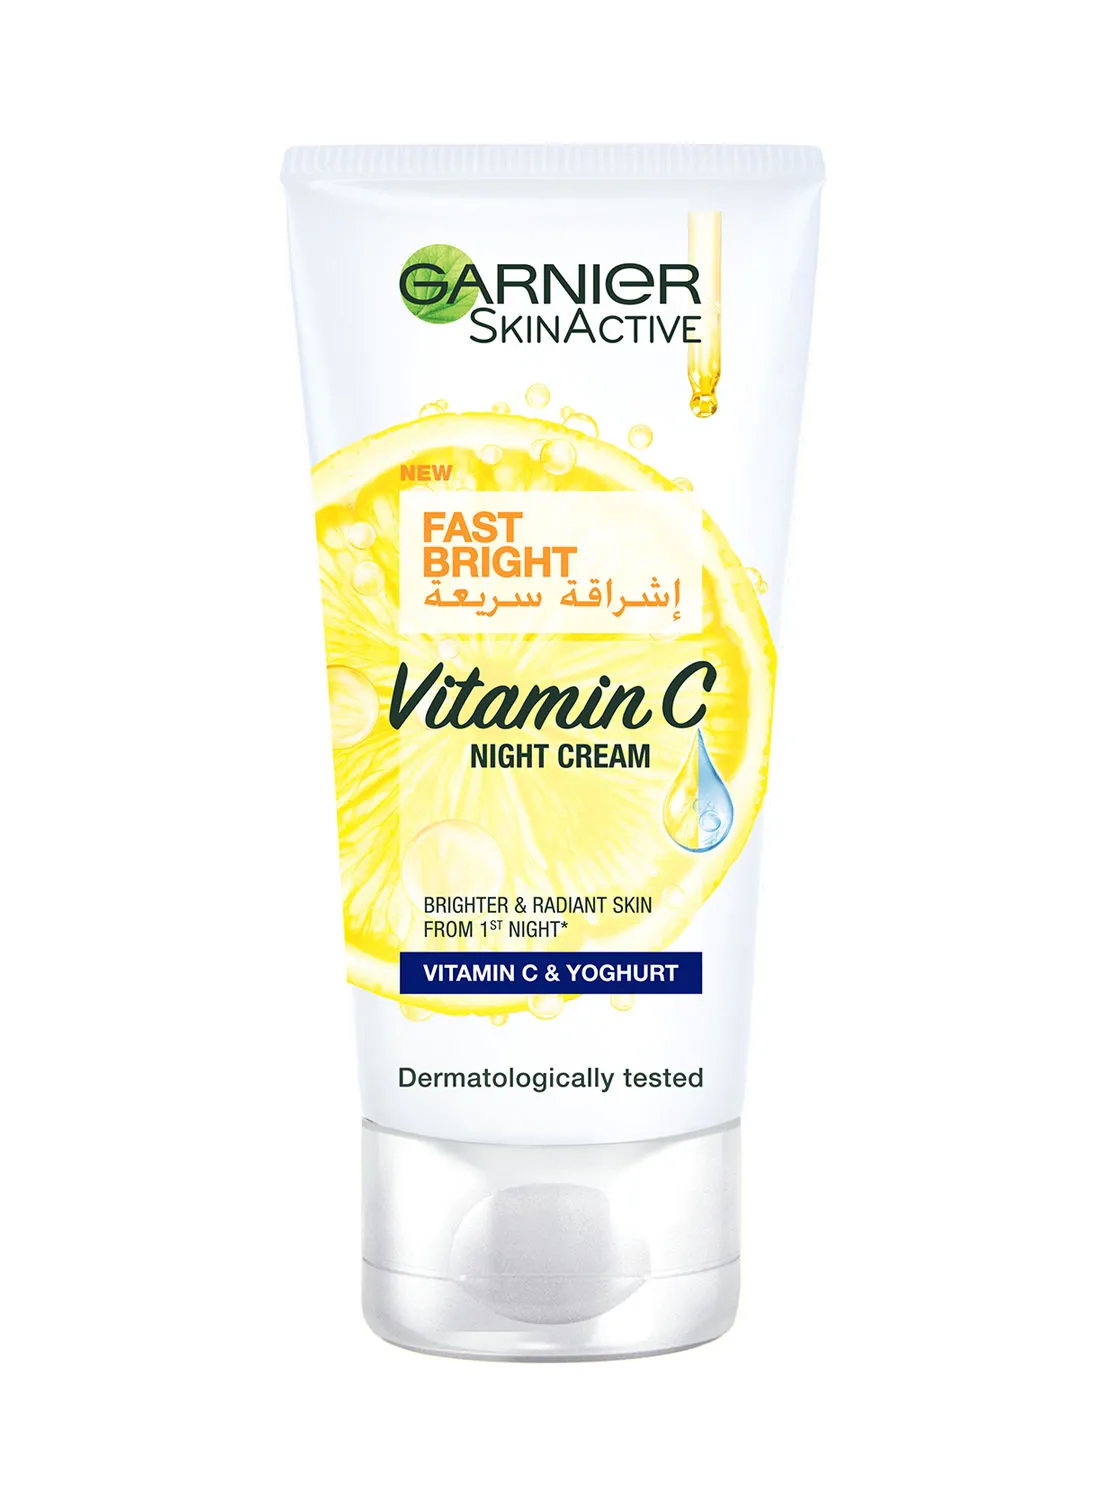 GARNIER SkinActive Fast Bright Night Cream With Vitamin C, Lemon And Yoghurt Clear 50ml